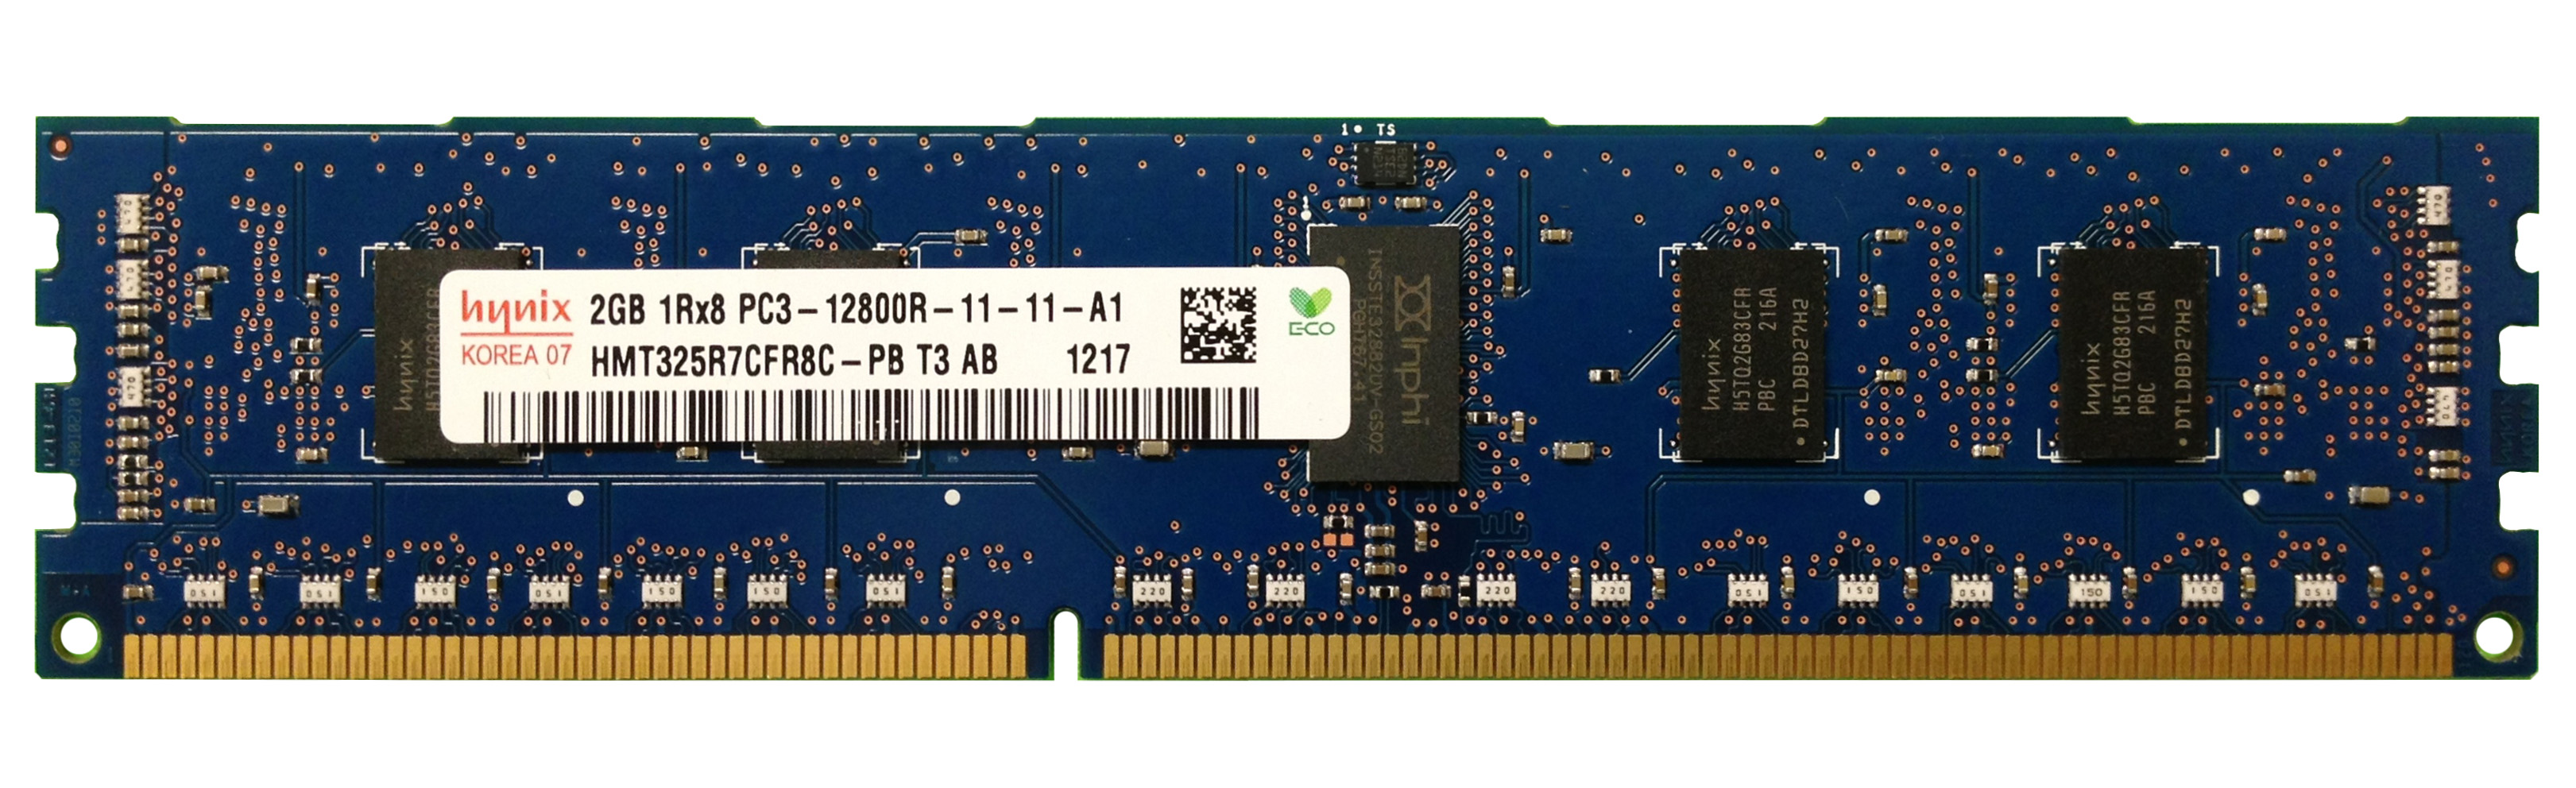 3D-14D311R16327-2G 2GB Module DDR3 PC3-12800 CL=11 Registered ECC w/Parity DDR3-1600 Single Rank, x8 1.5V 256Meg x 72 for Hewlett-Packard ProLiant DL385p Gen8 (G8) CTO (653203-B21) n/a